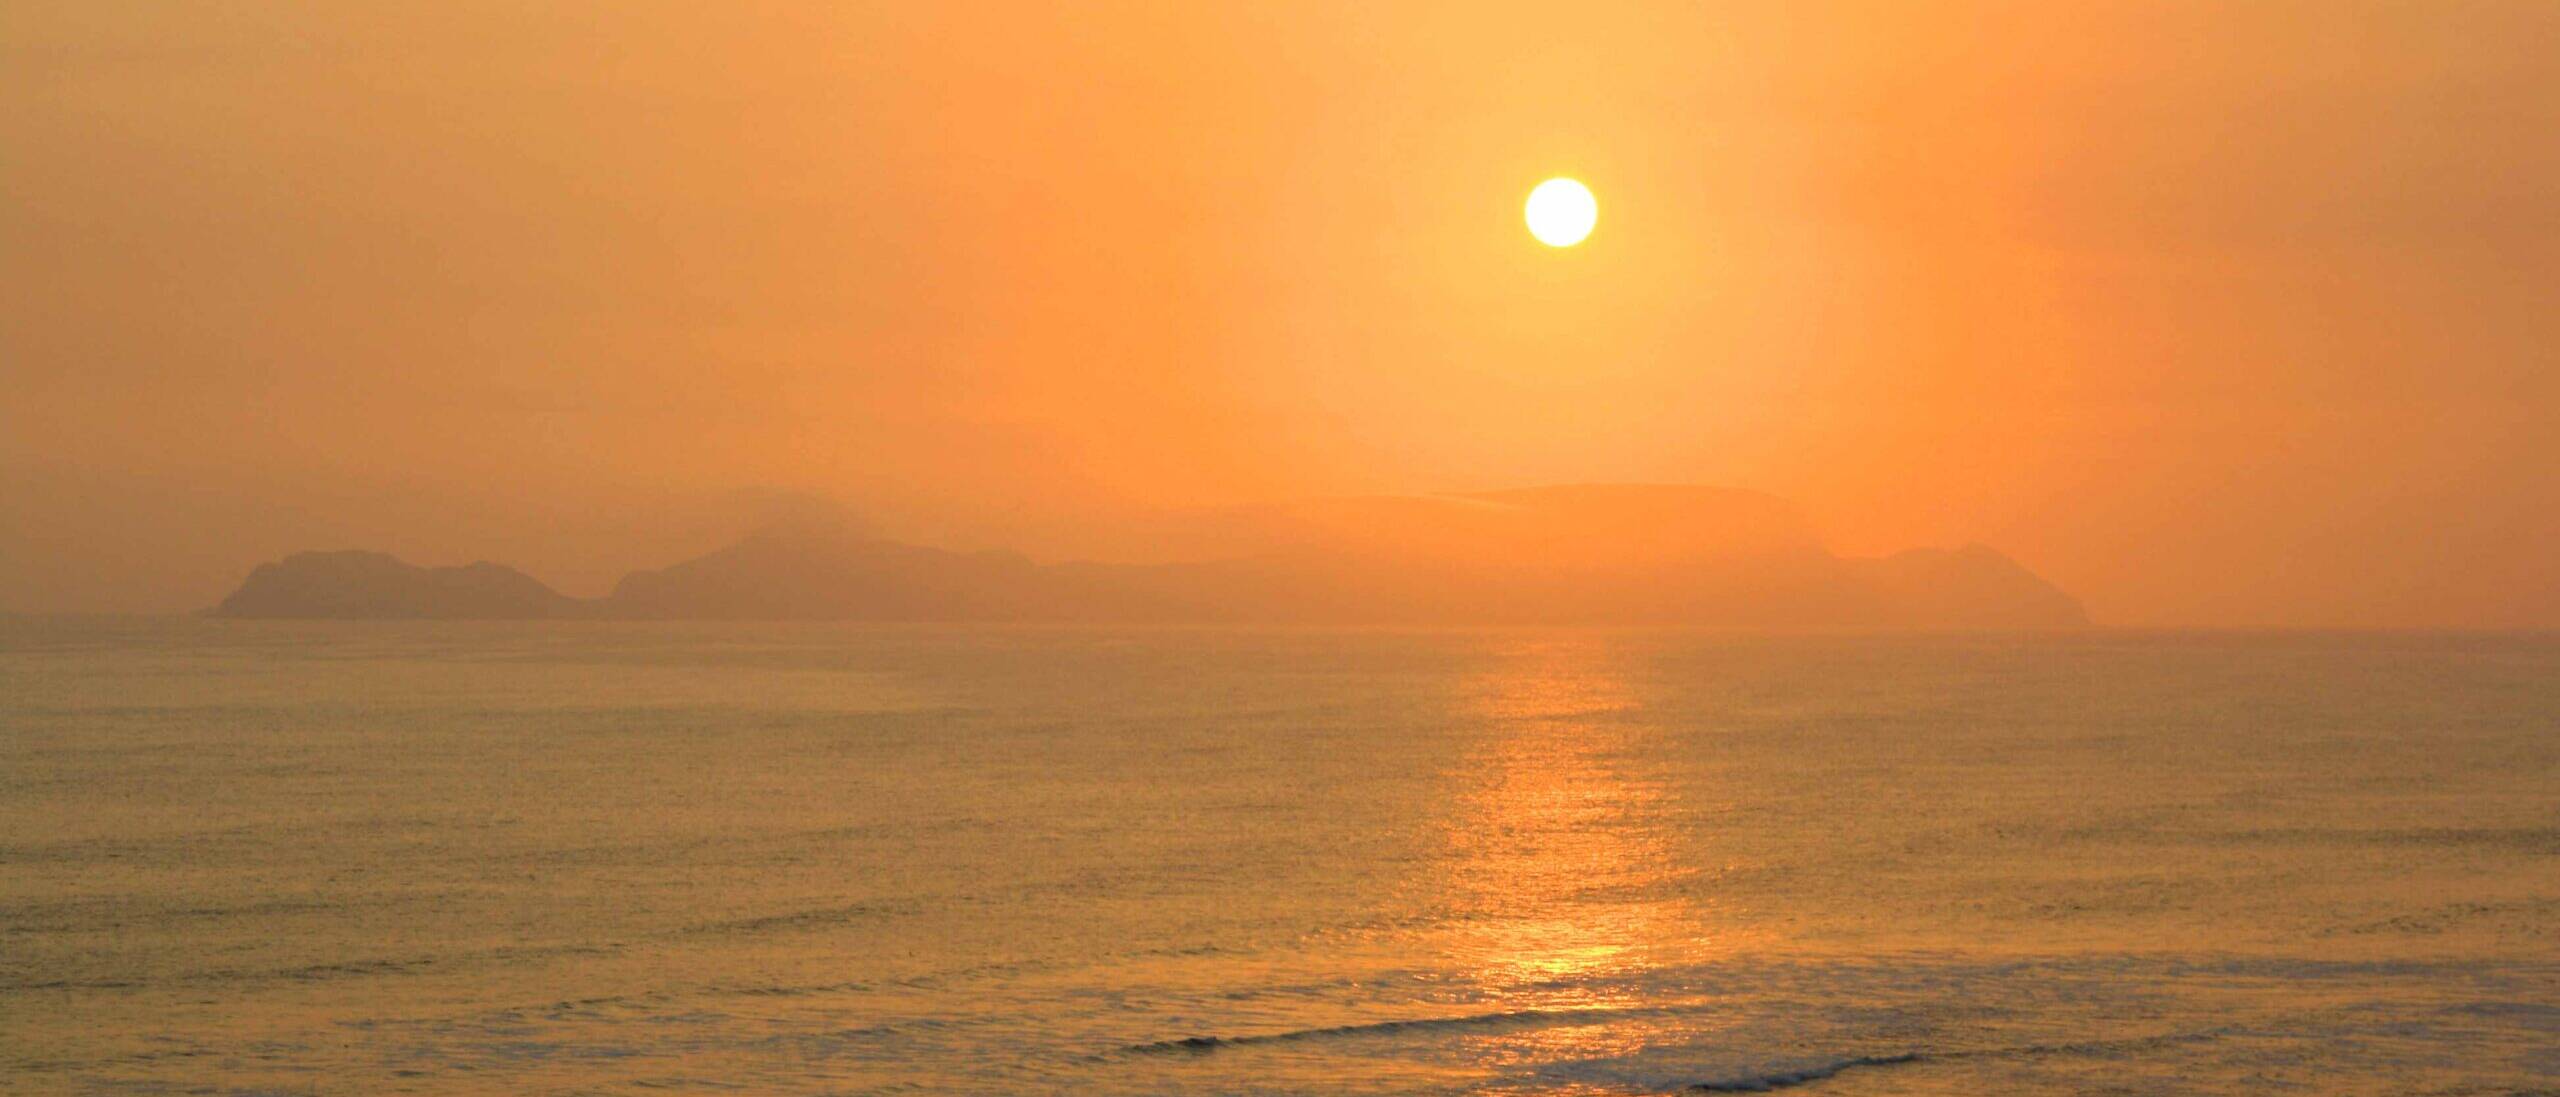 sunset view from Miraflores Lima Peru